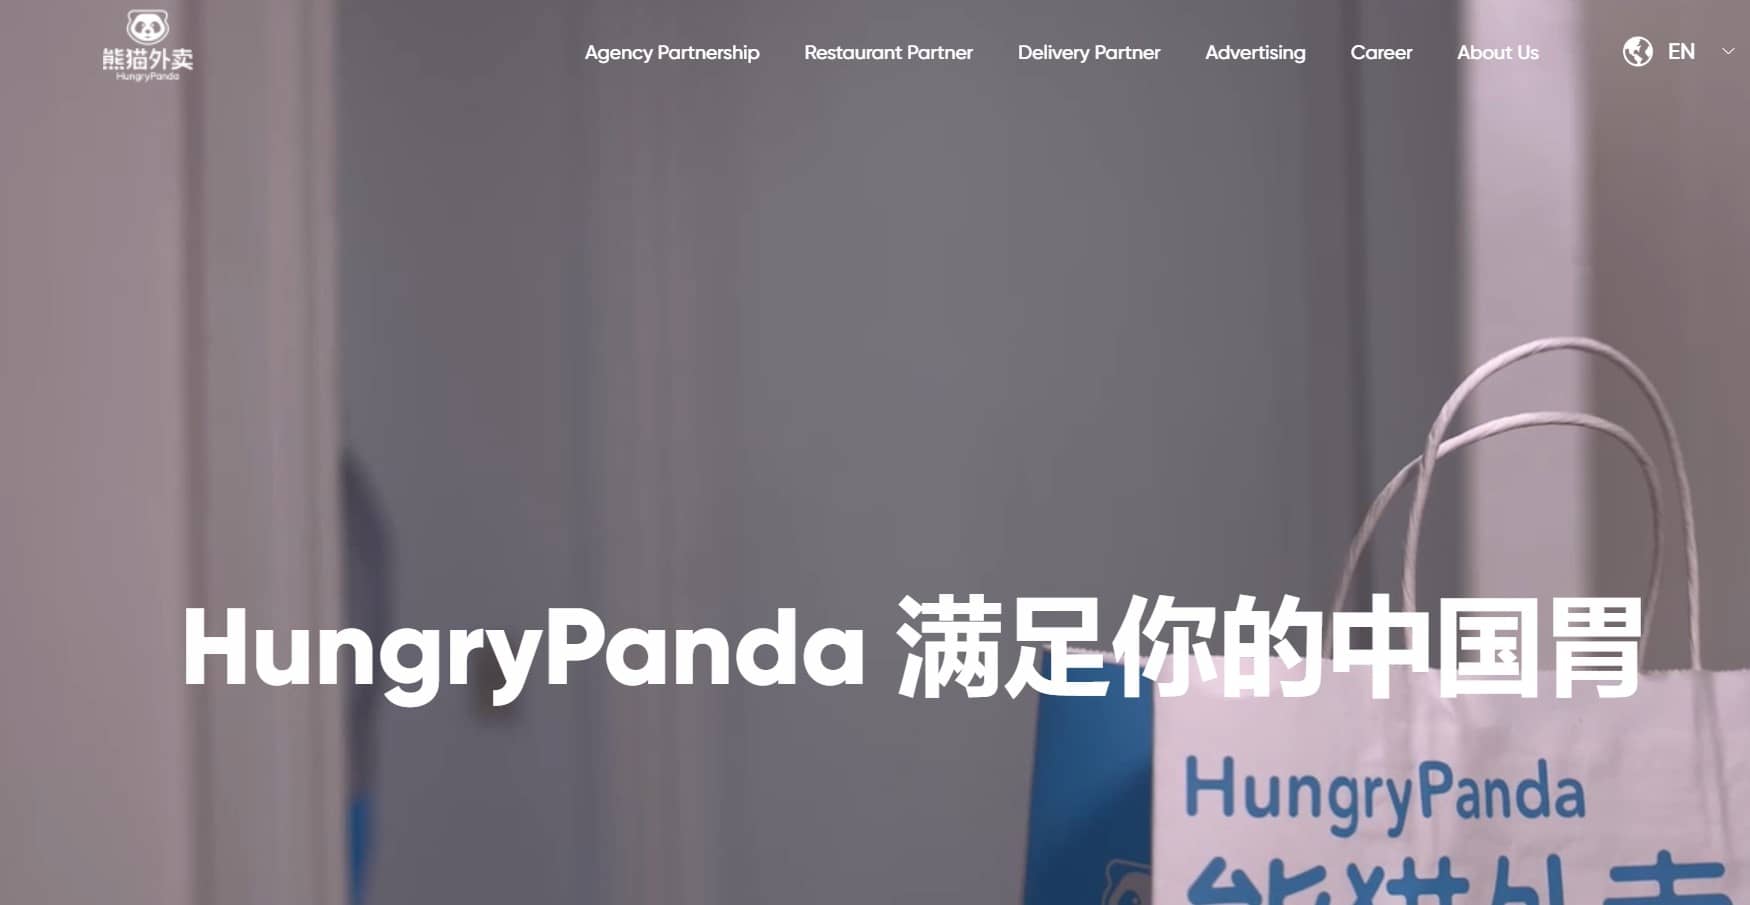 Hungry Panda homepage